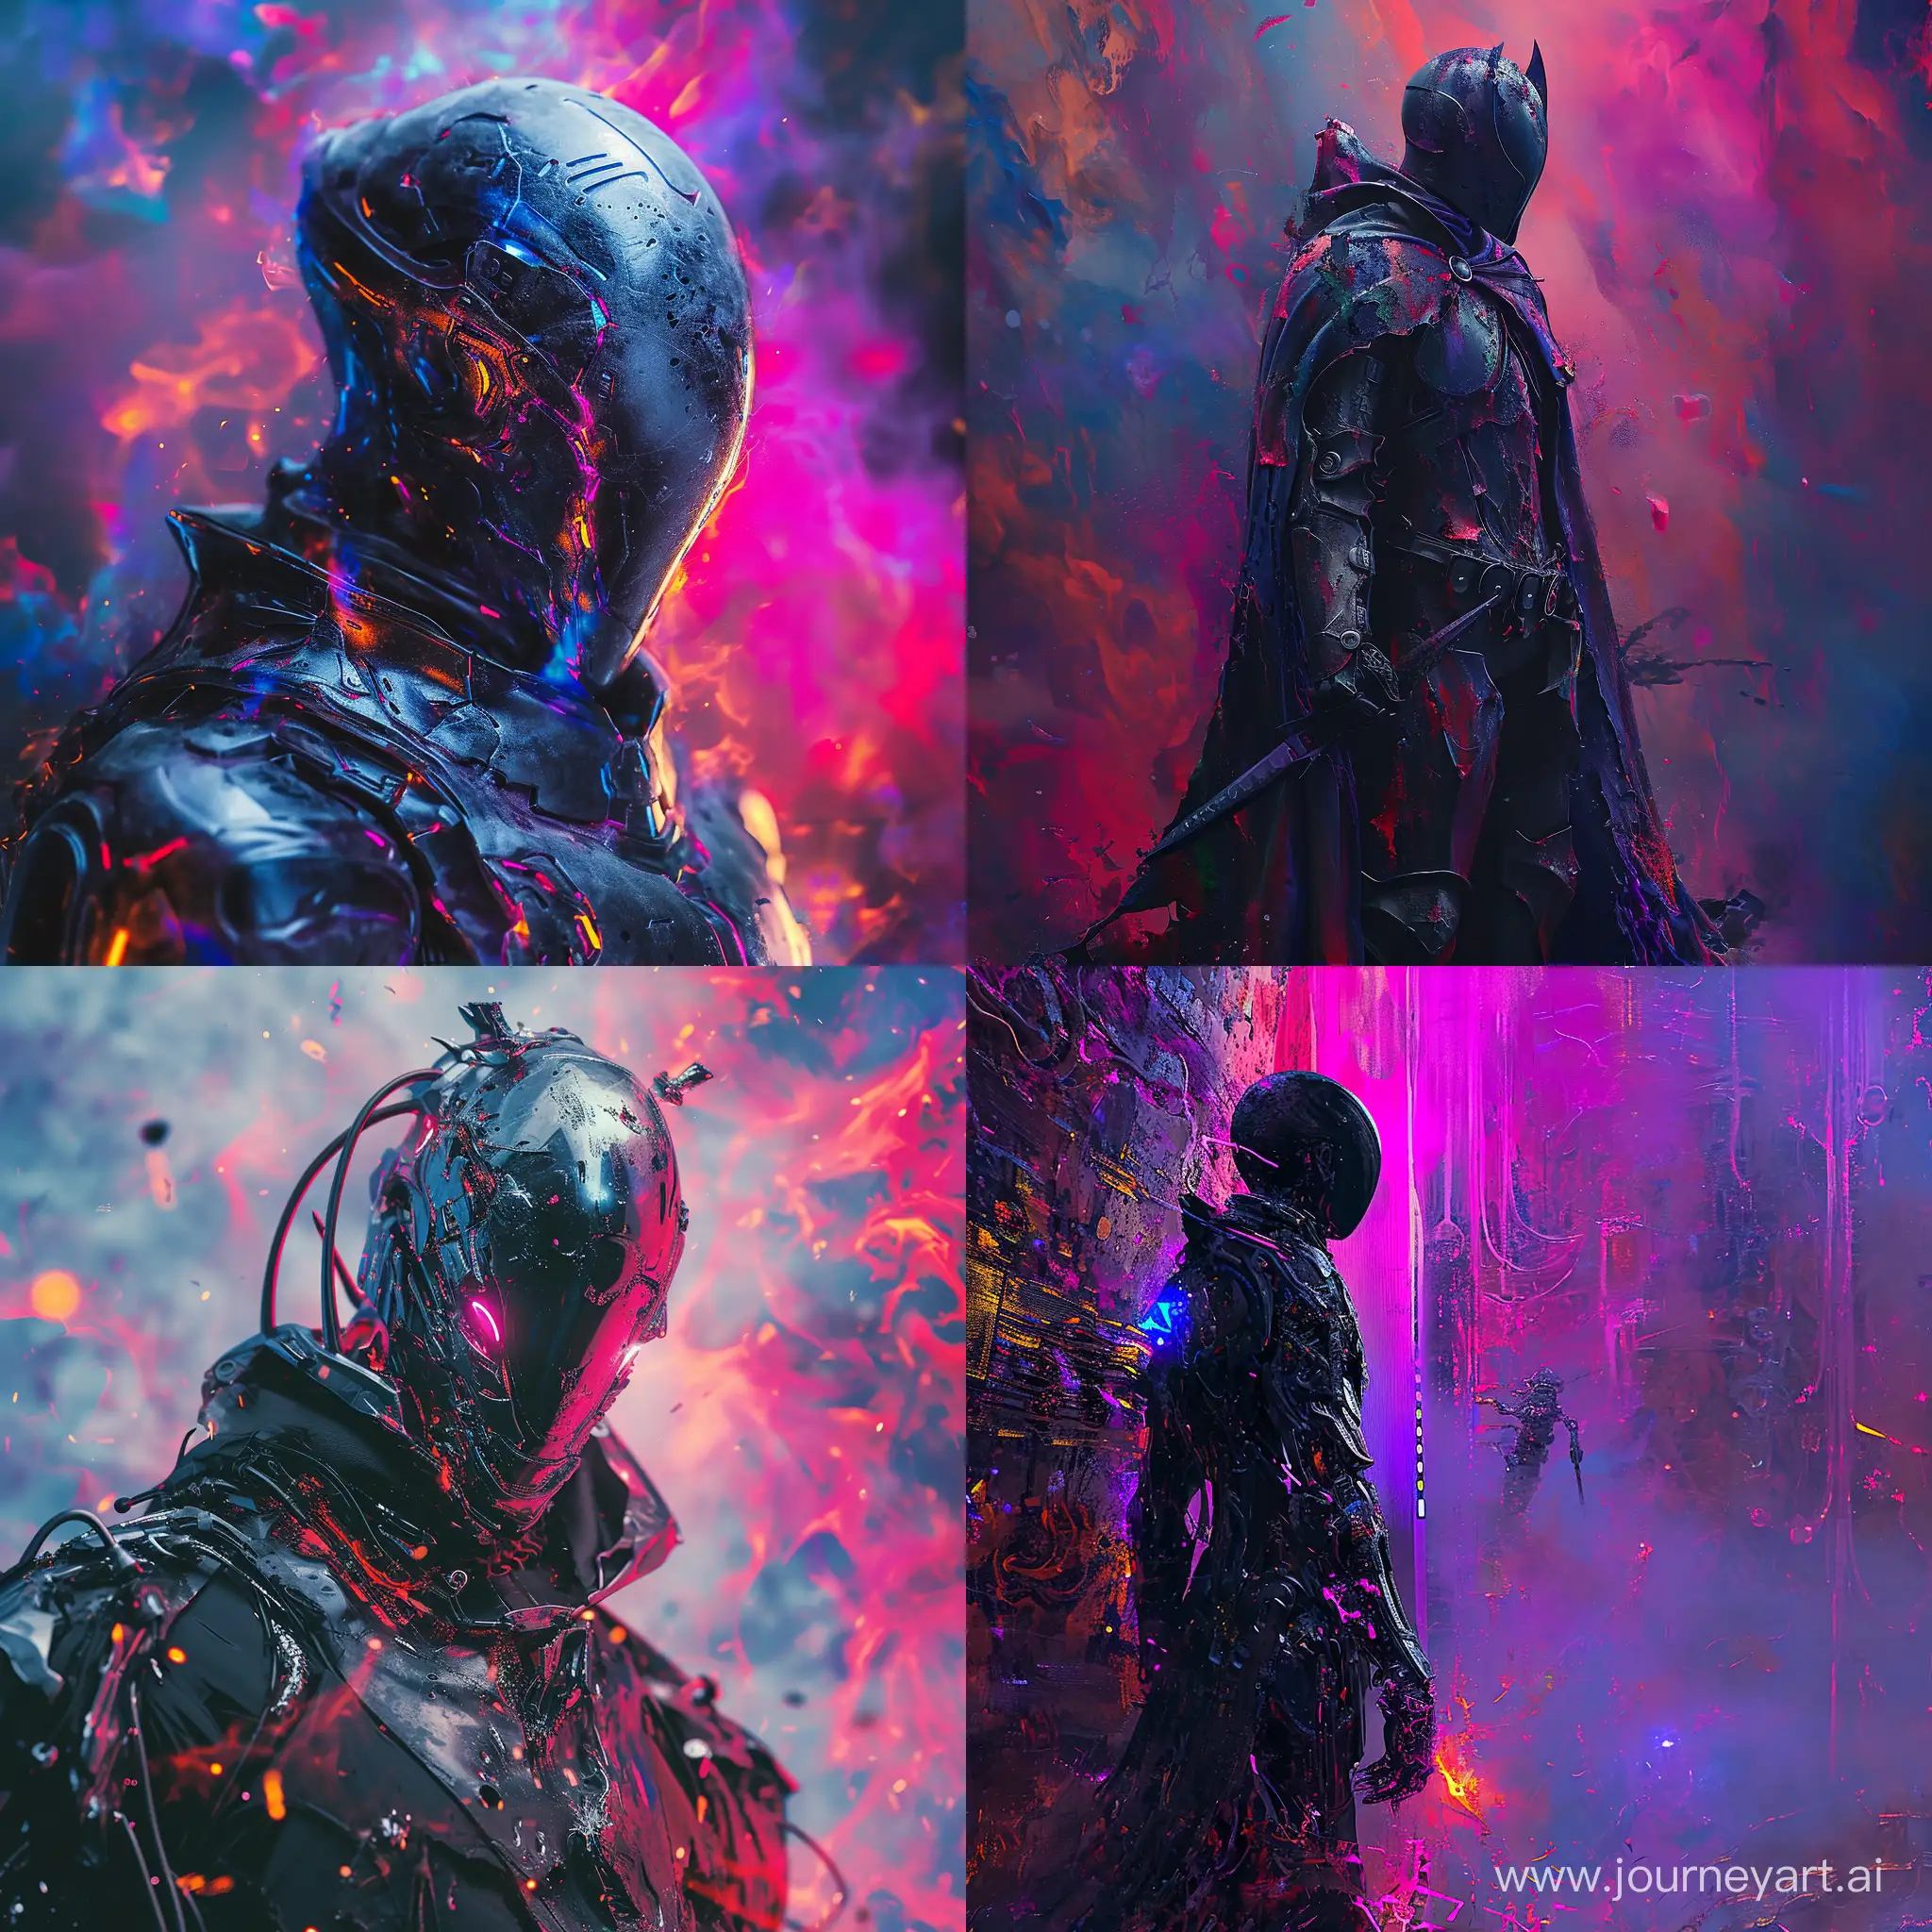 Cyberpunk-Black-Knight-in-Unusual-Fantasy-Armor-amidst-Colorful-Explosions